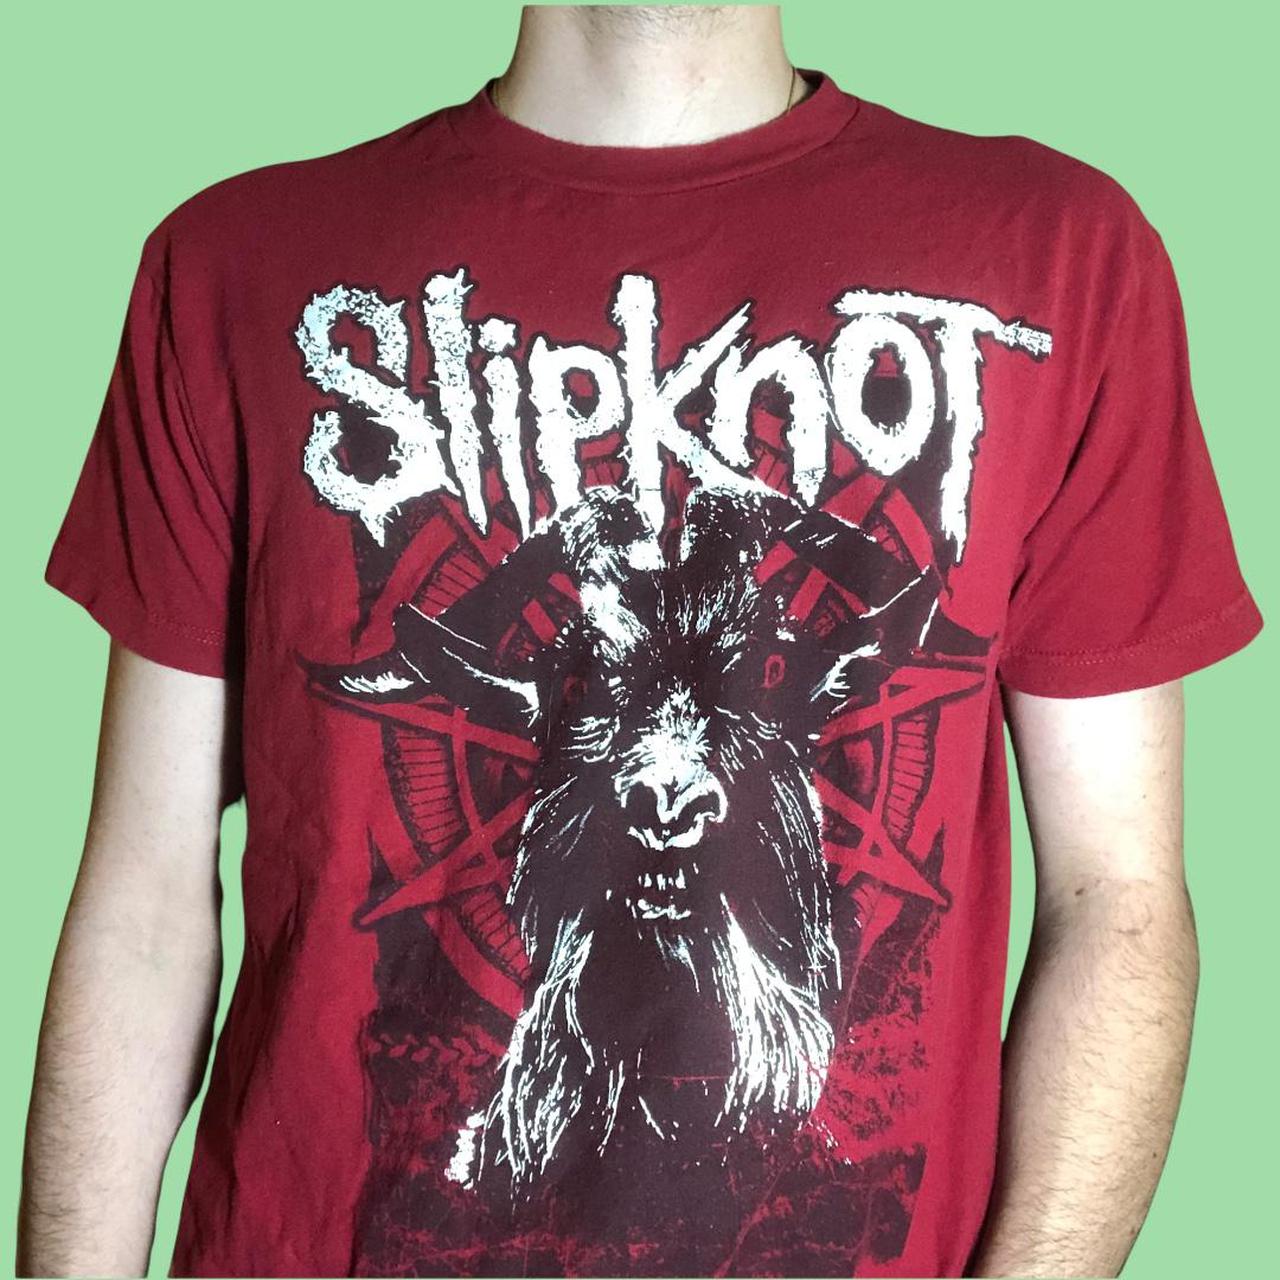 Product Image 2 - Red Slipknot metal t-shirt

Sick Satanic